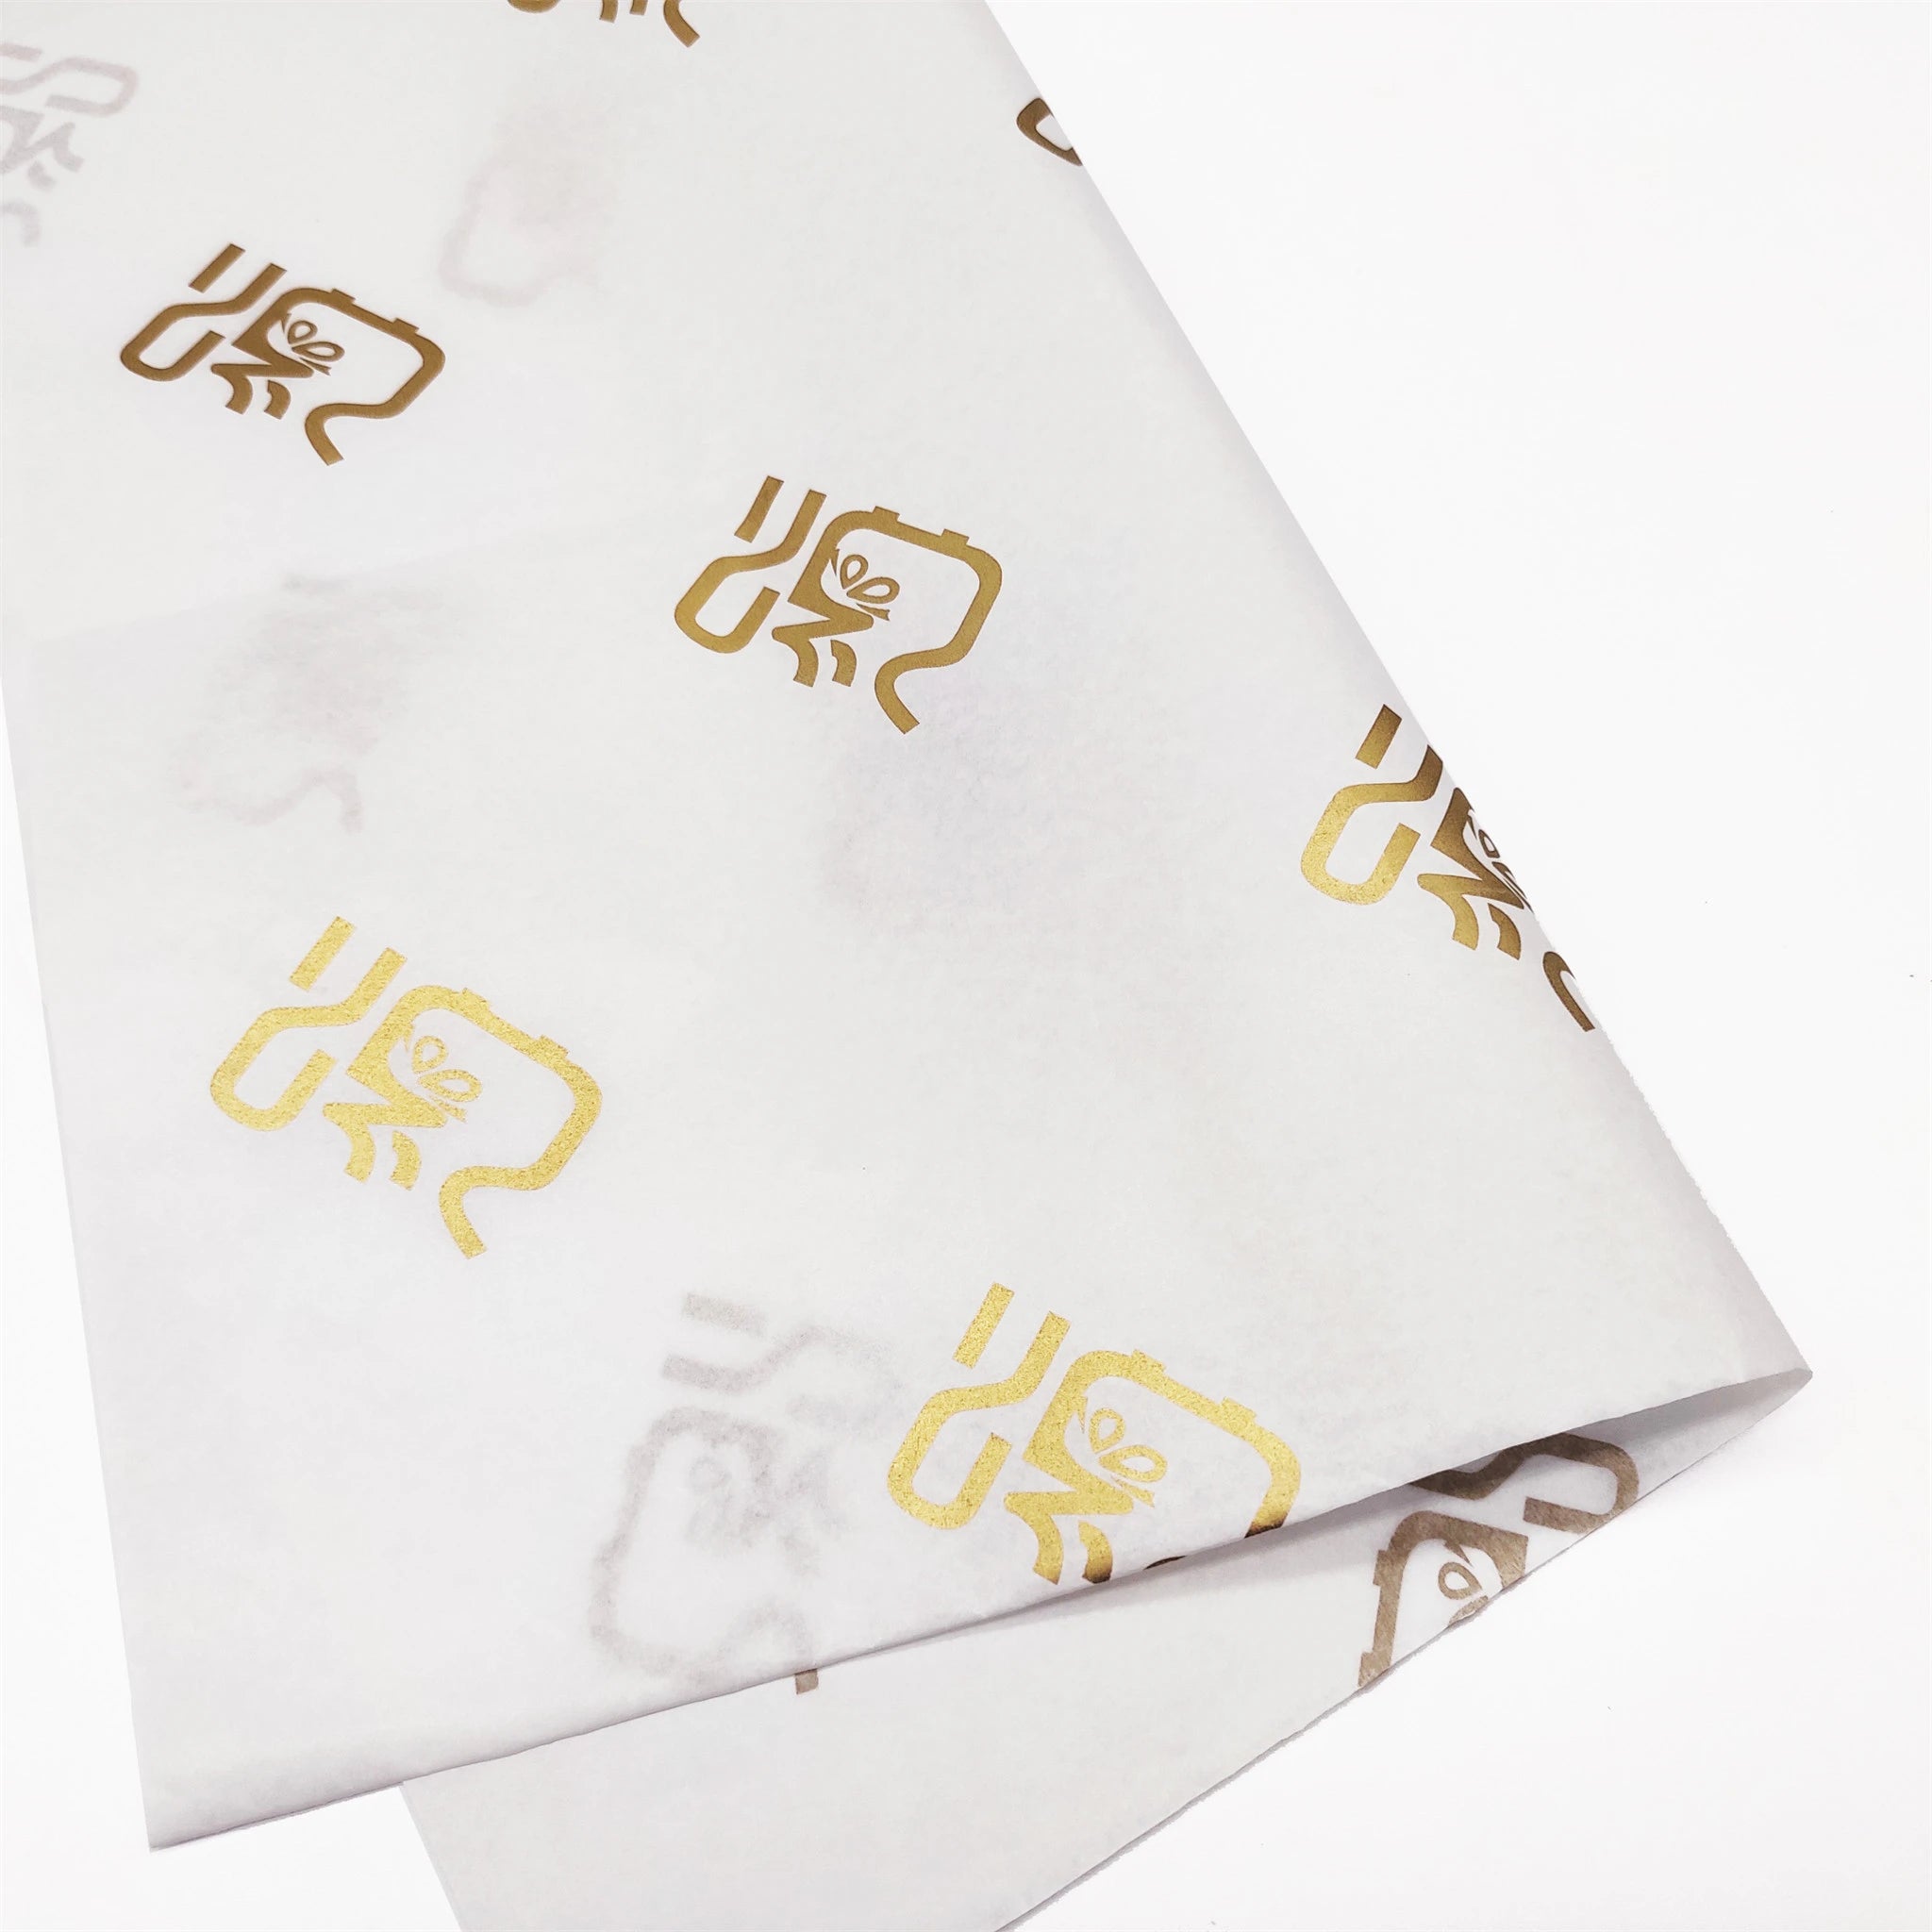 Custom Printed Tissue Paper - printed Tissue Paper